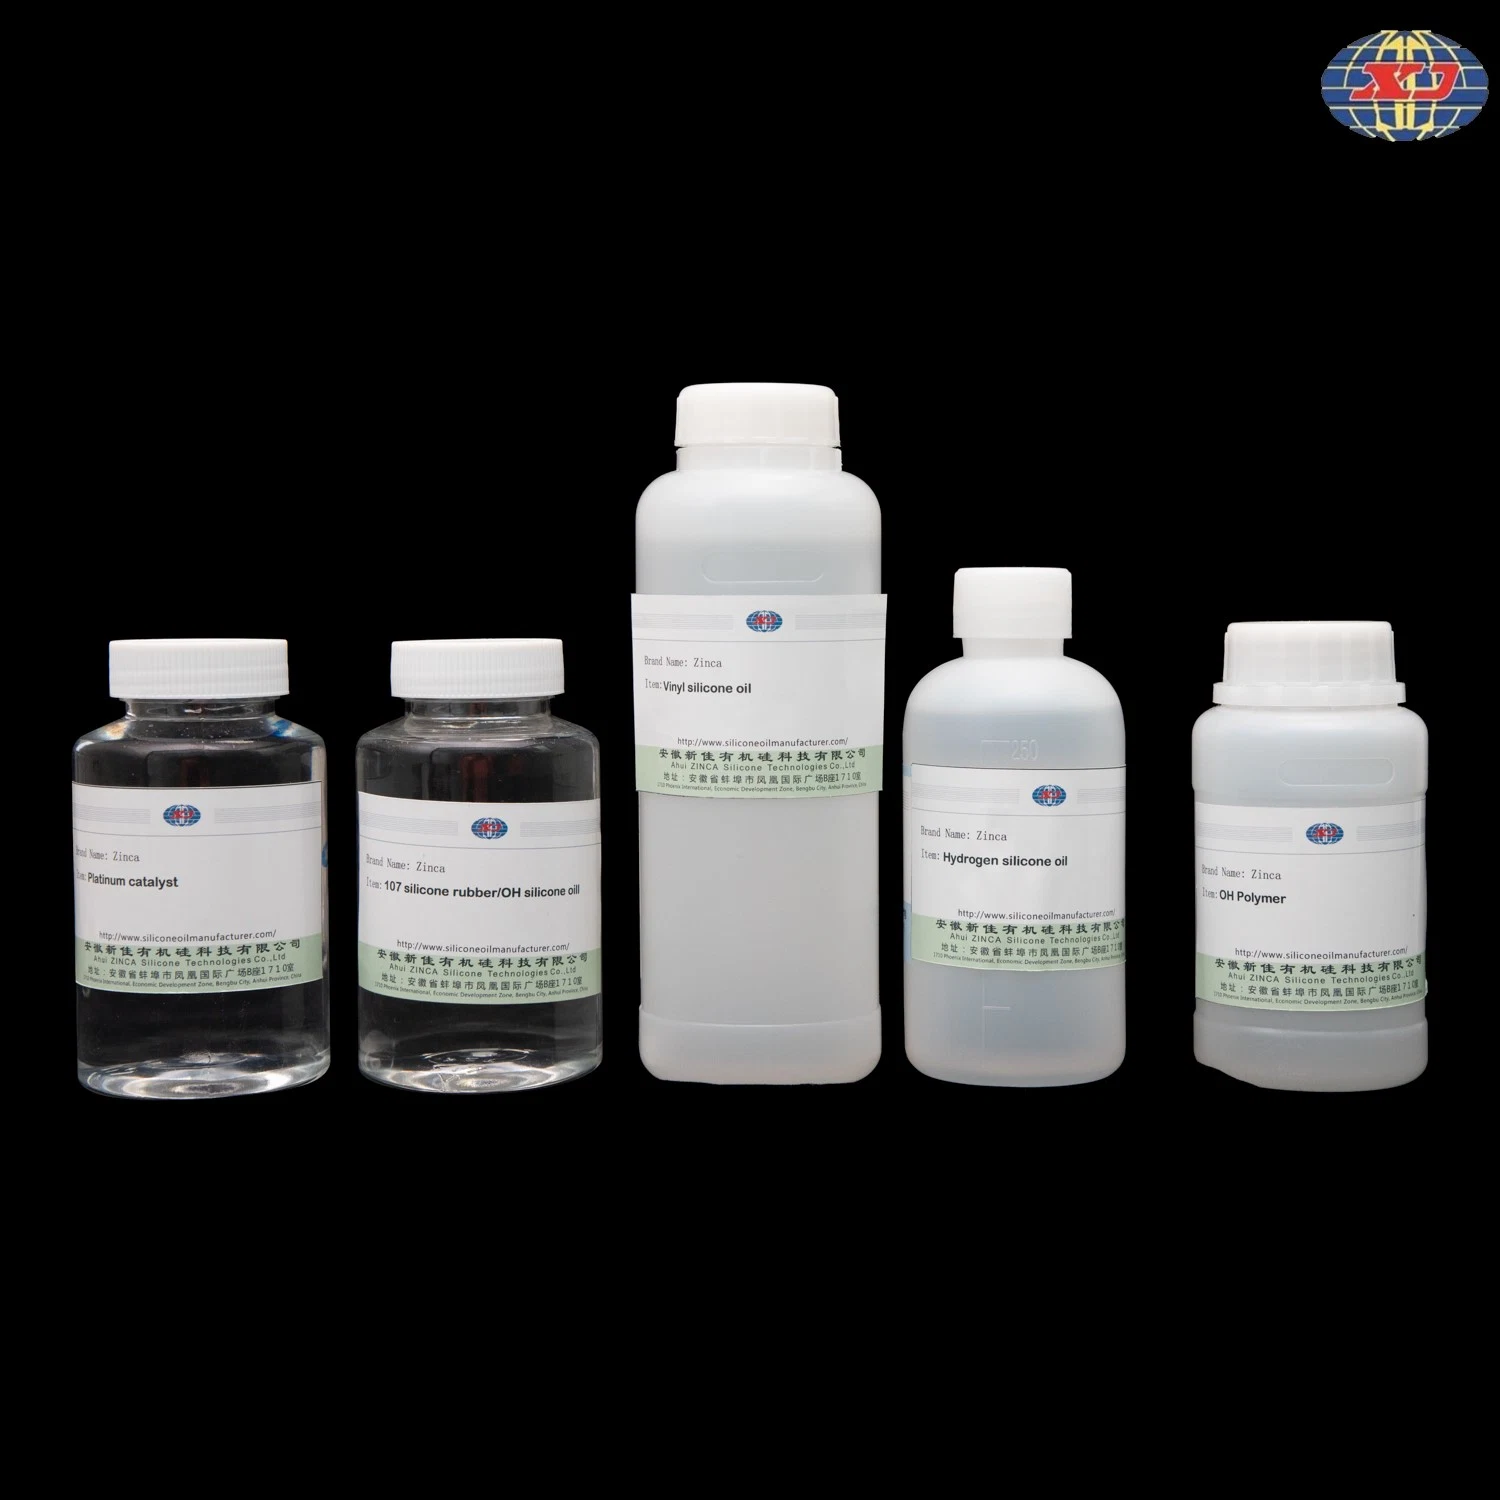 Zinca 100% Reines Methyl-Silikonöl Pdms Polydimethylsiloxan-Silikonflüssigkeit Einstellbare Viskosität